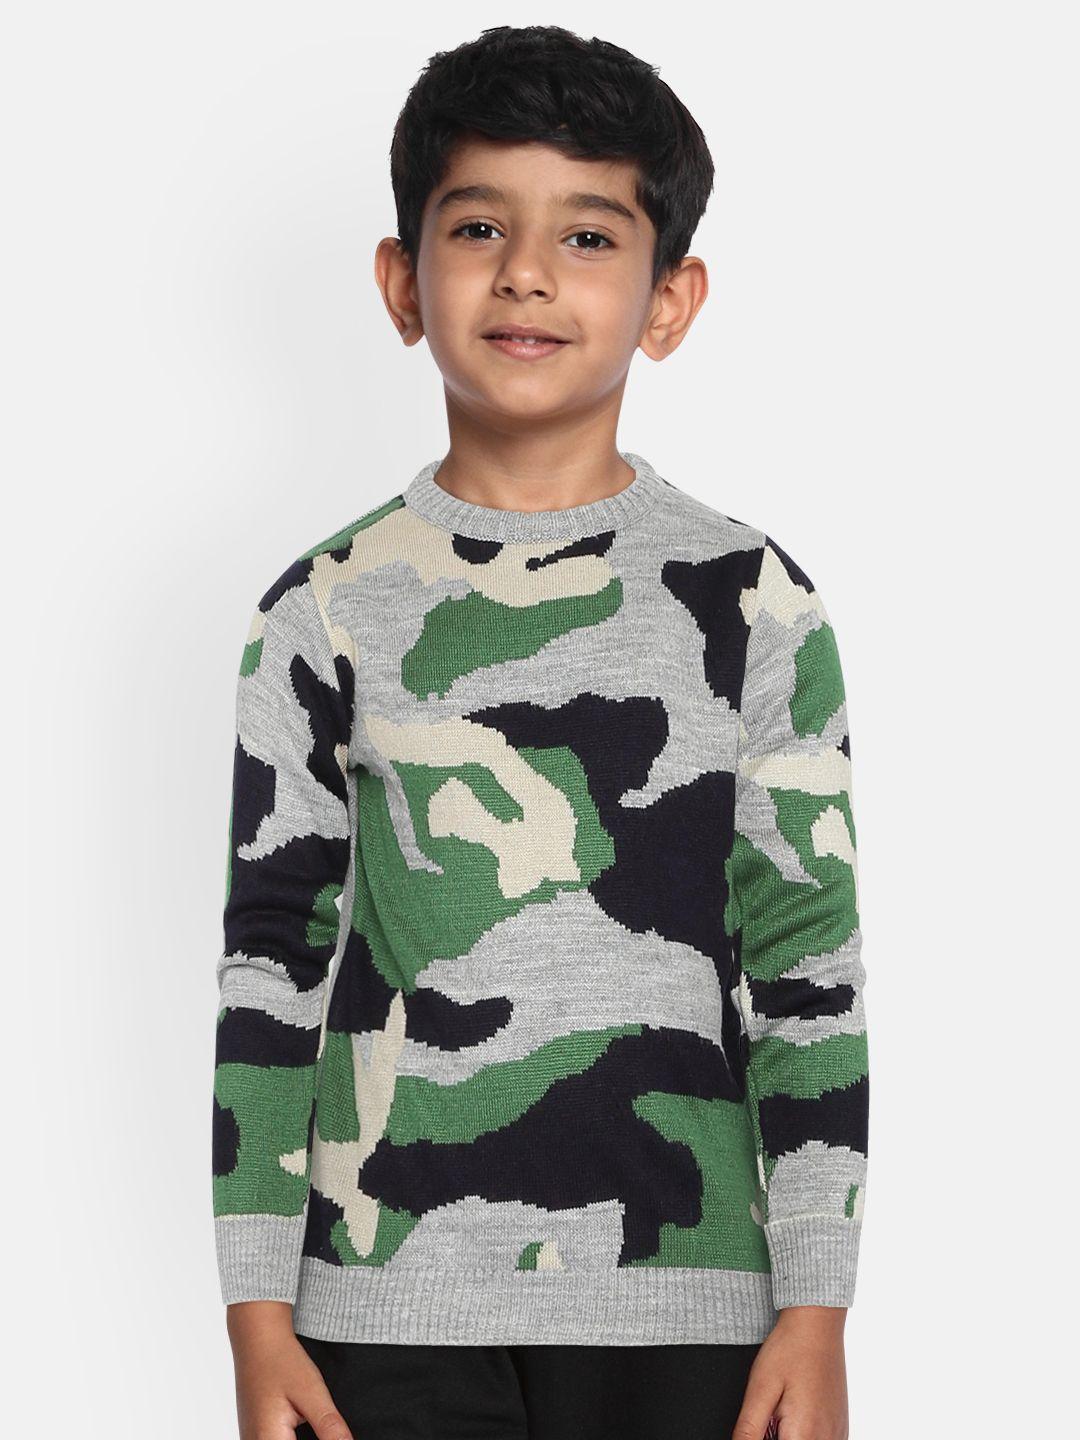 yk-boys-grey-melange-&-green-camouflage-patterned-pullover